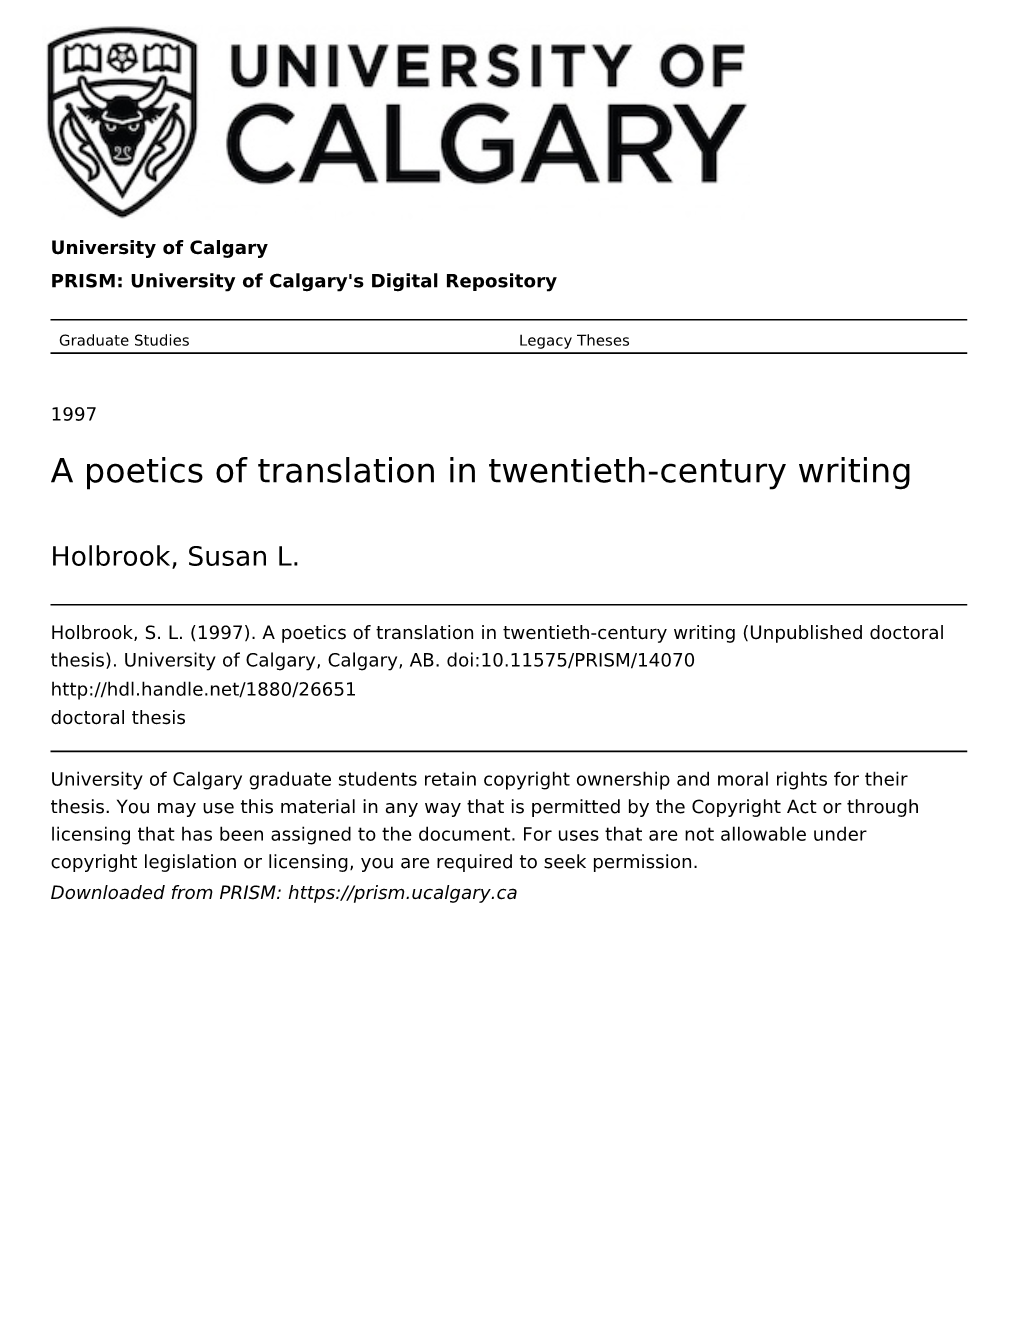 A Poetics of Translation in Twentieth-Century Writing